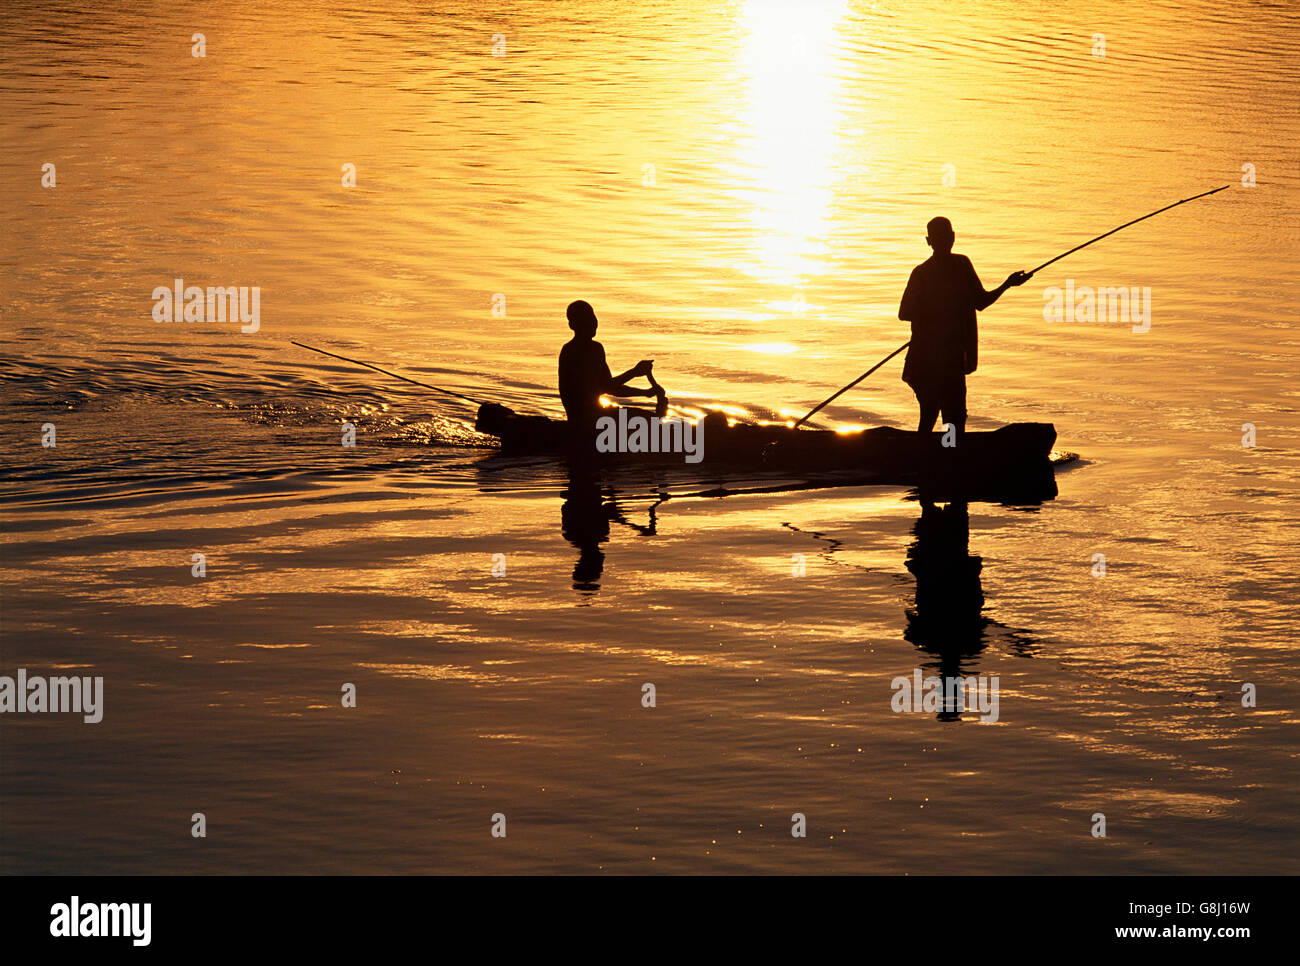 Fishermen on fishing boat during sunset, Silhouette, Luangwa River, Zambia. Stock Photo